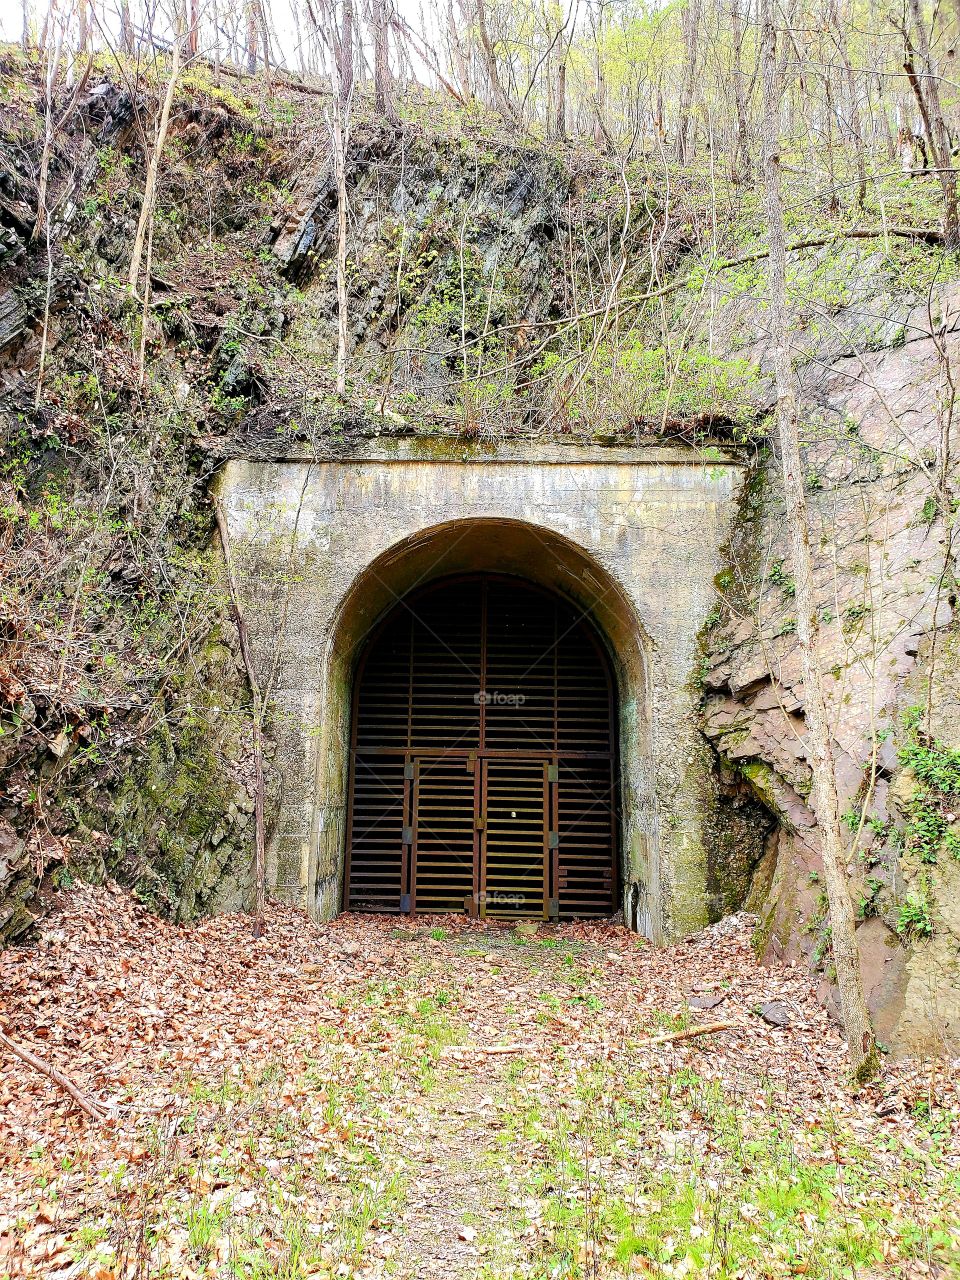 Tunnel off the beaten path